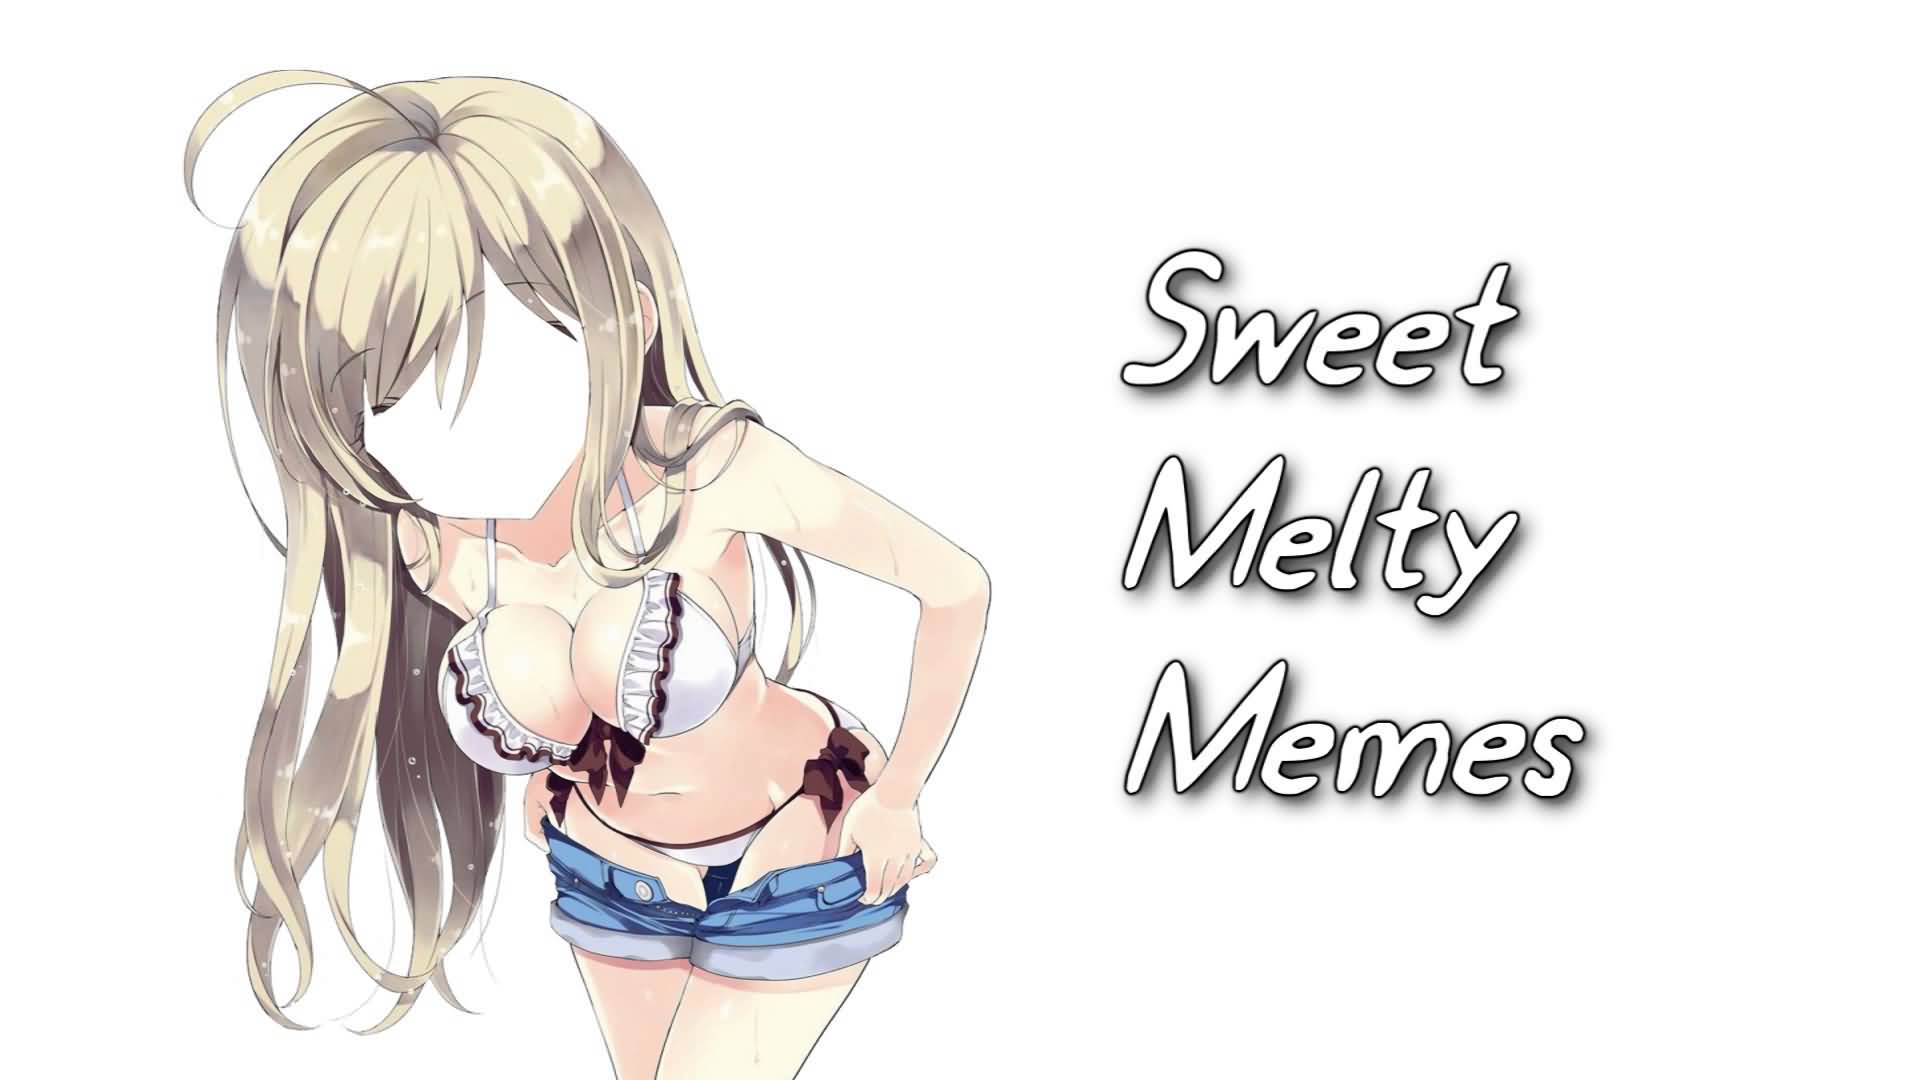 Sweet Melty Meme Funny Image Photo Joke 03